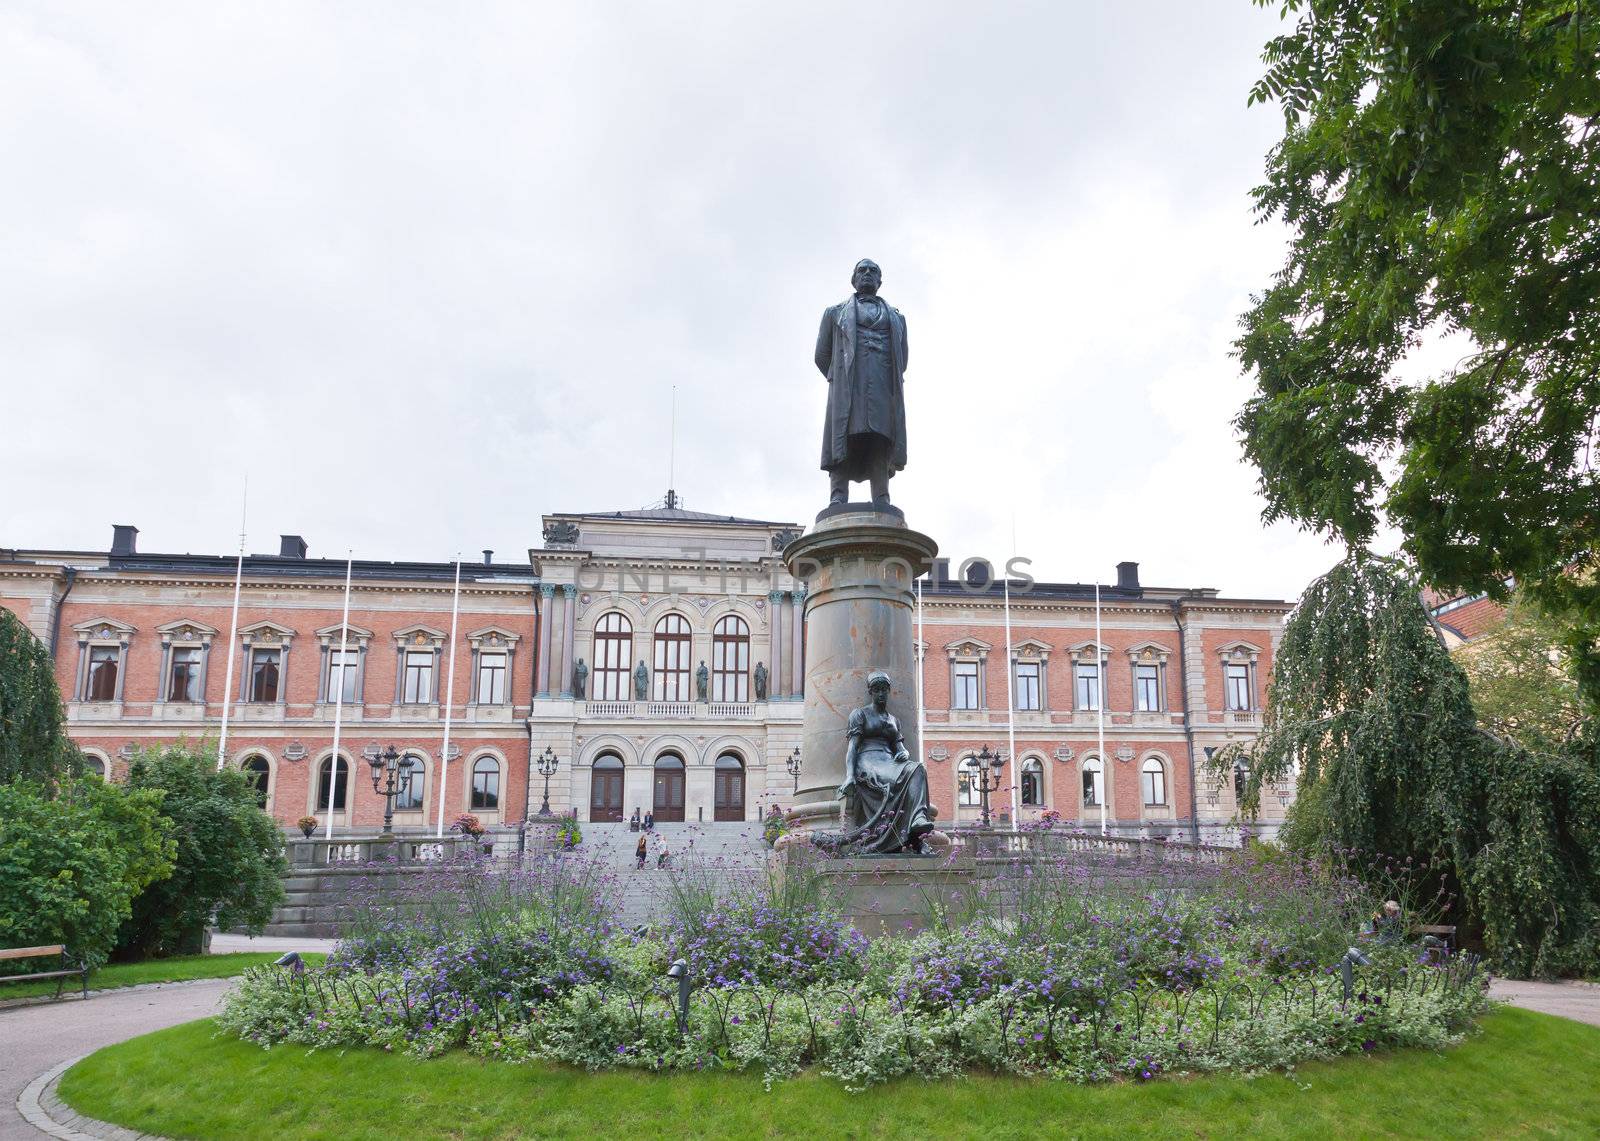 Uppsala University in Sweden - the oldest university in Scandinavia  by gary718